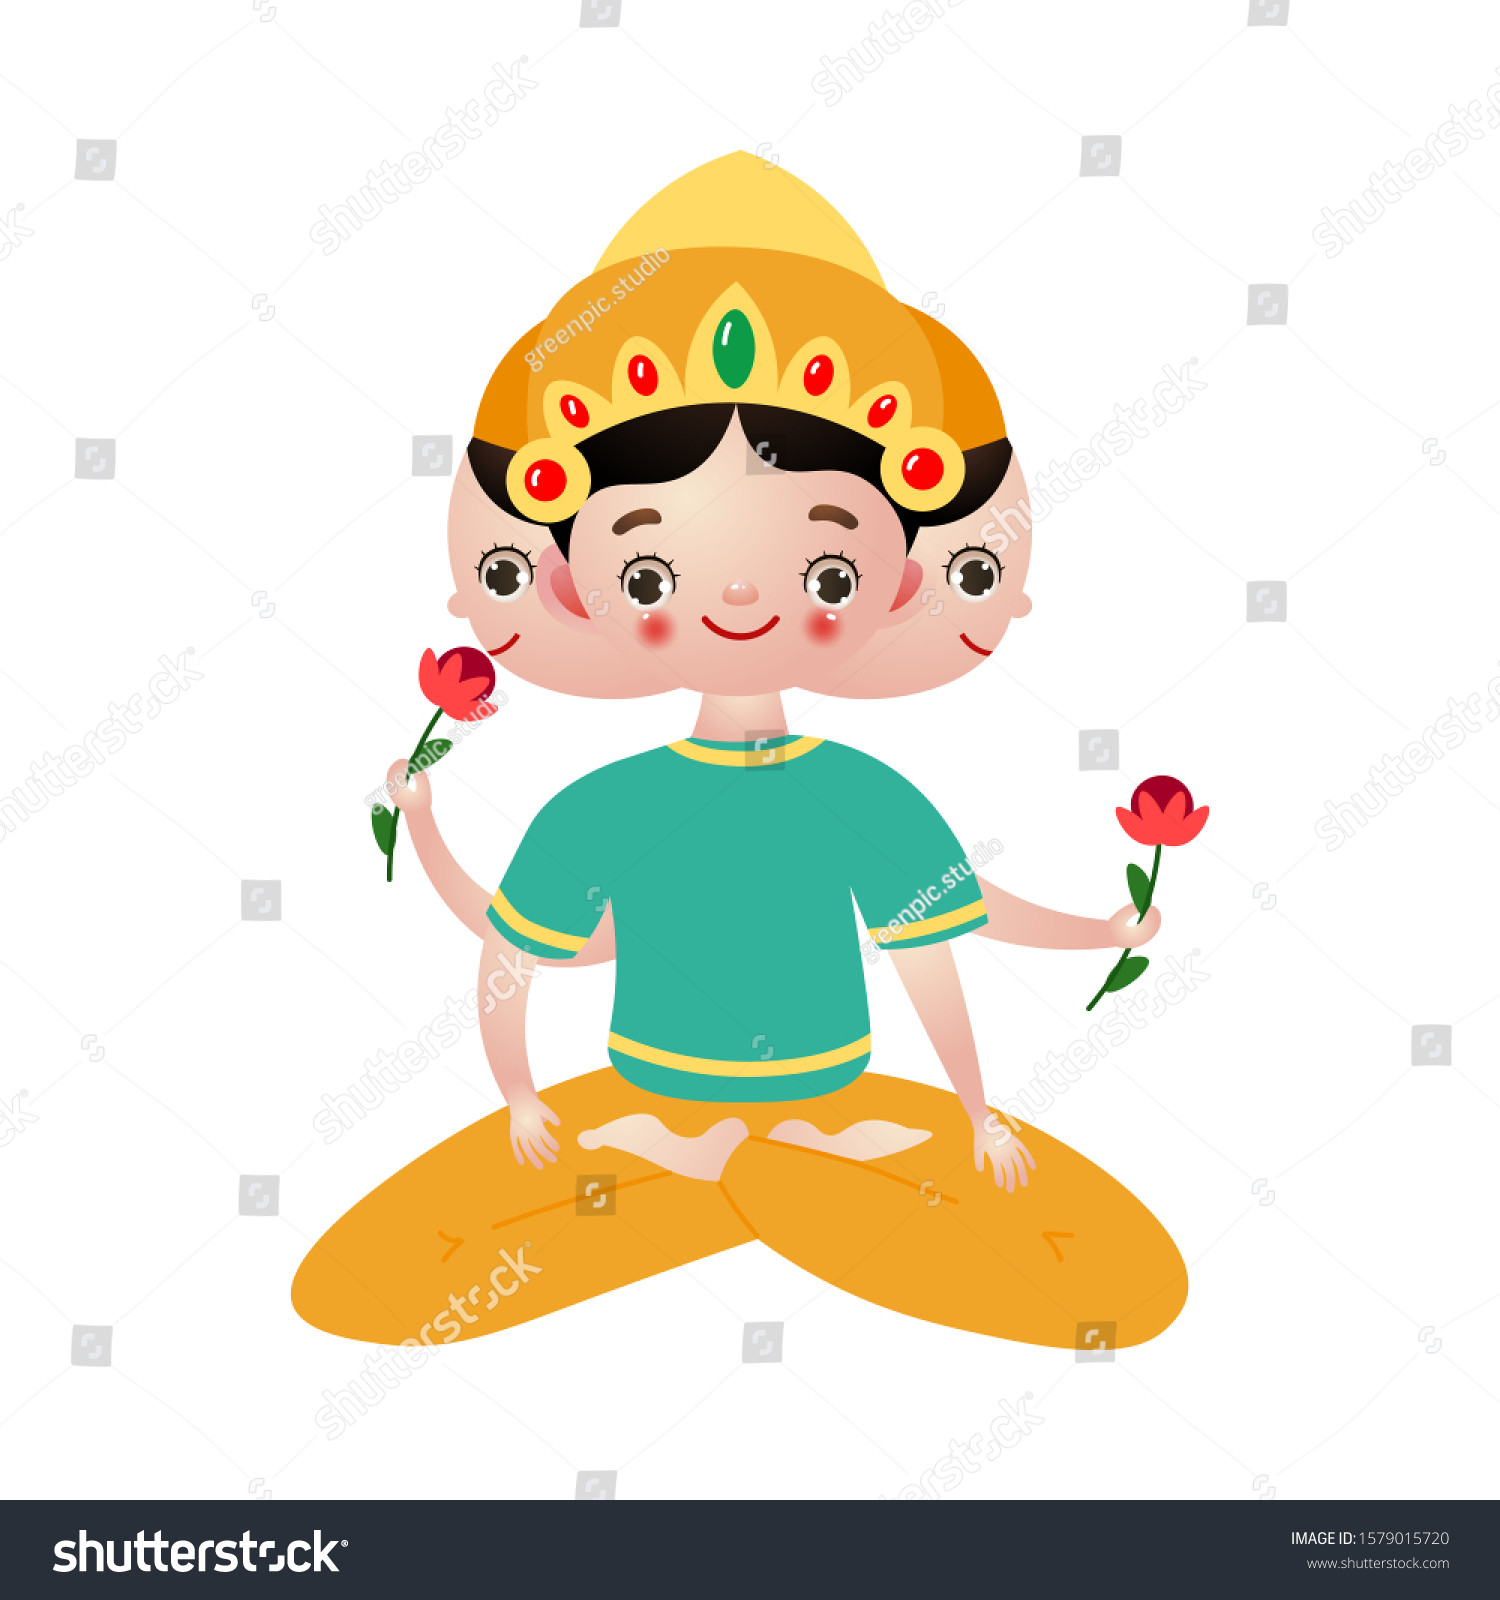 SVG of Hindu deity with three heads sitting lotus pose vector illustration svg